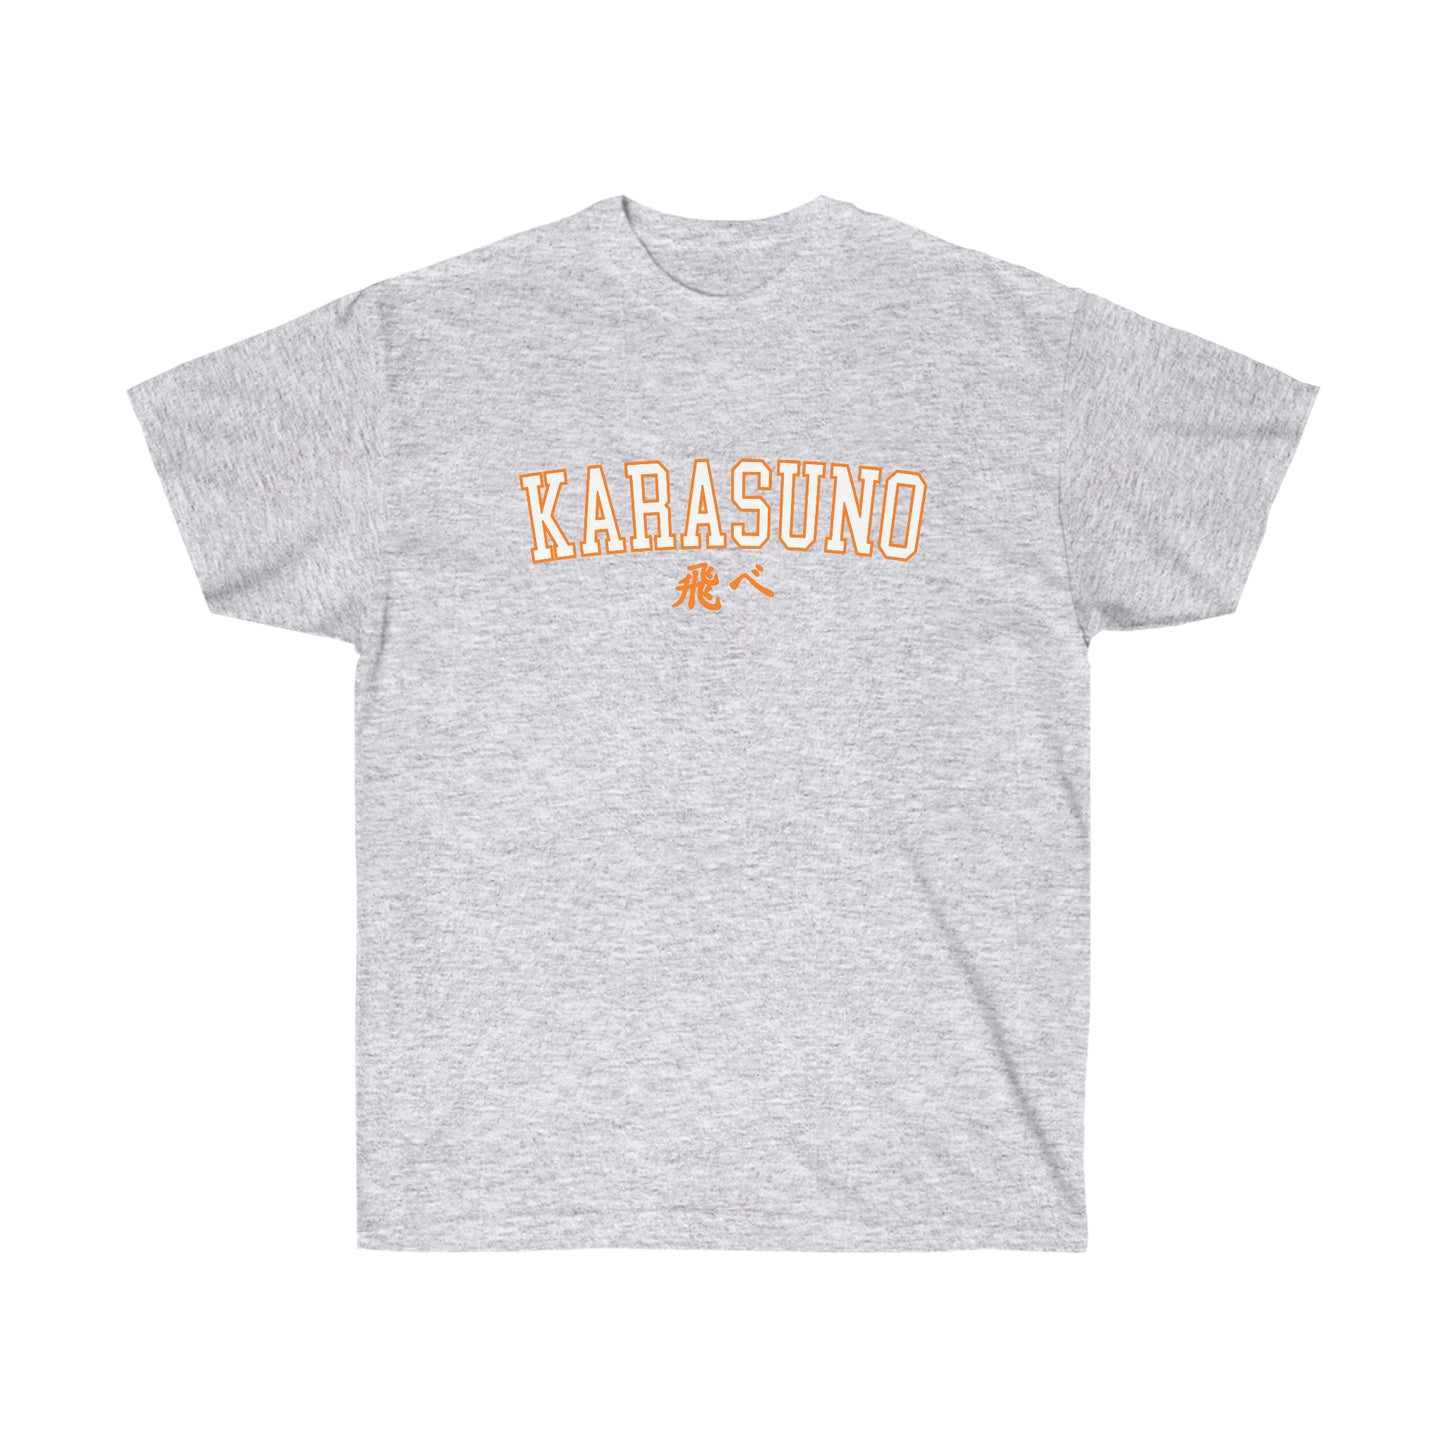 Karasun shirt Anime t-shirt Otaku Minimal Volleyball School